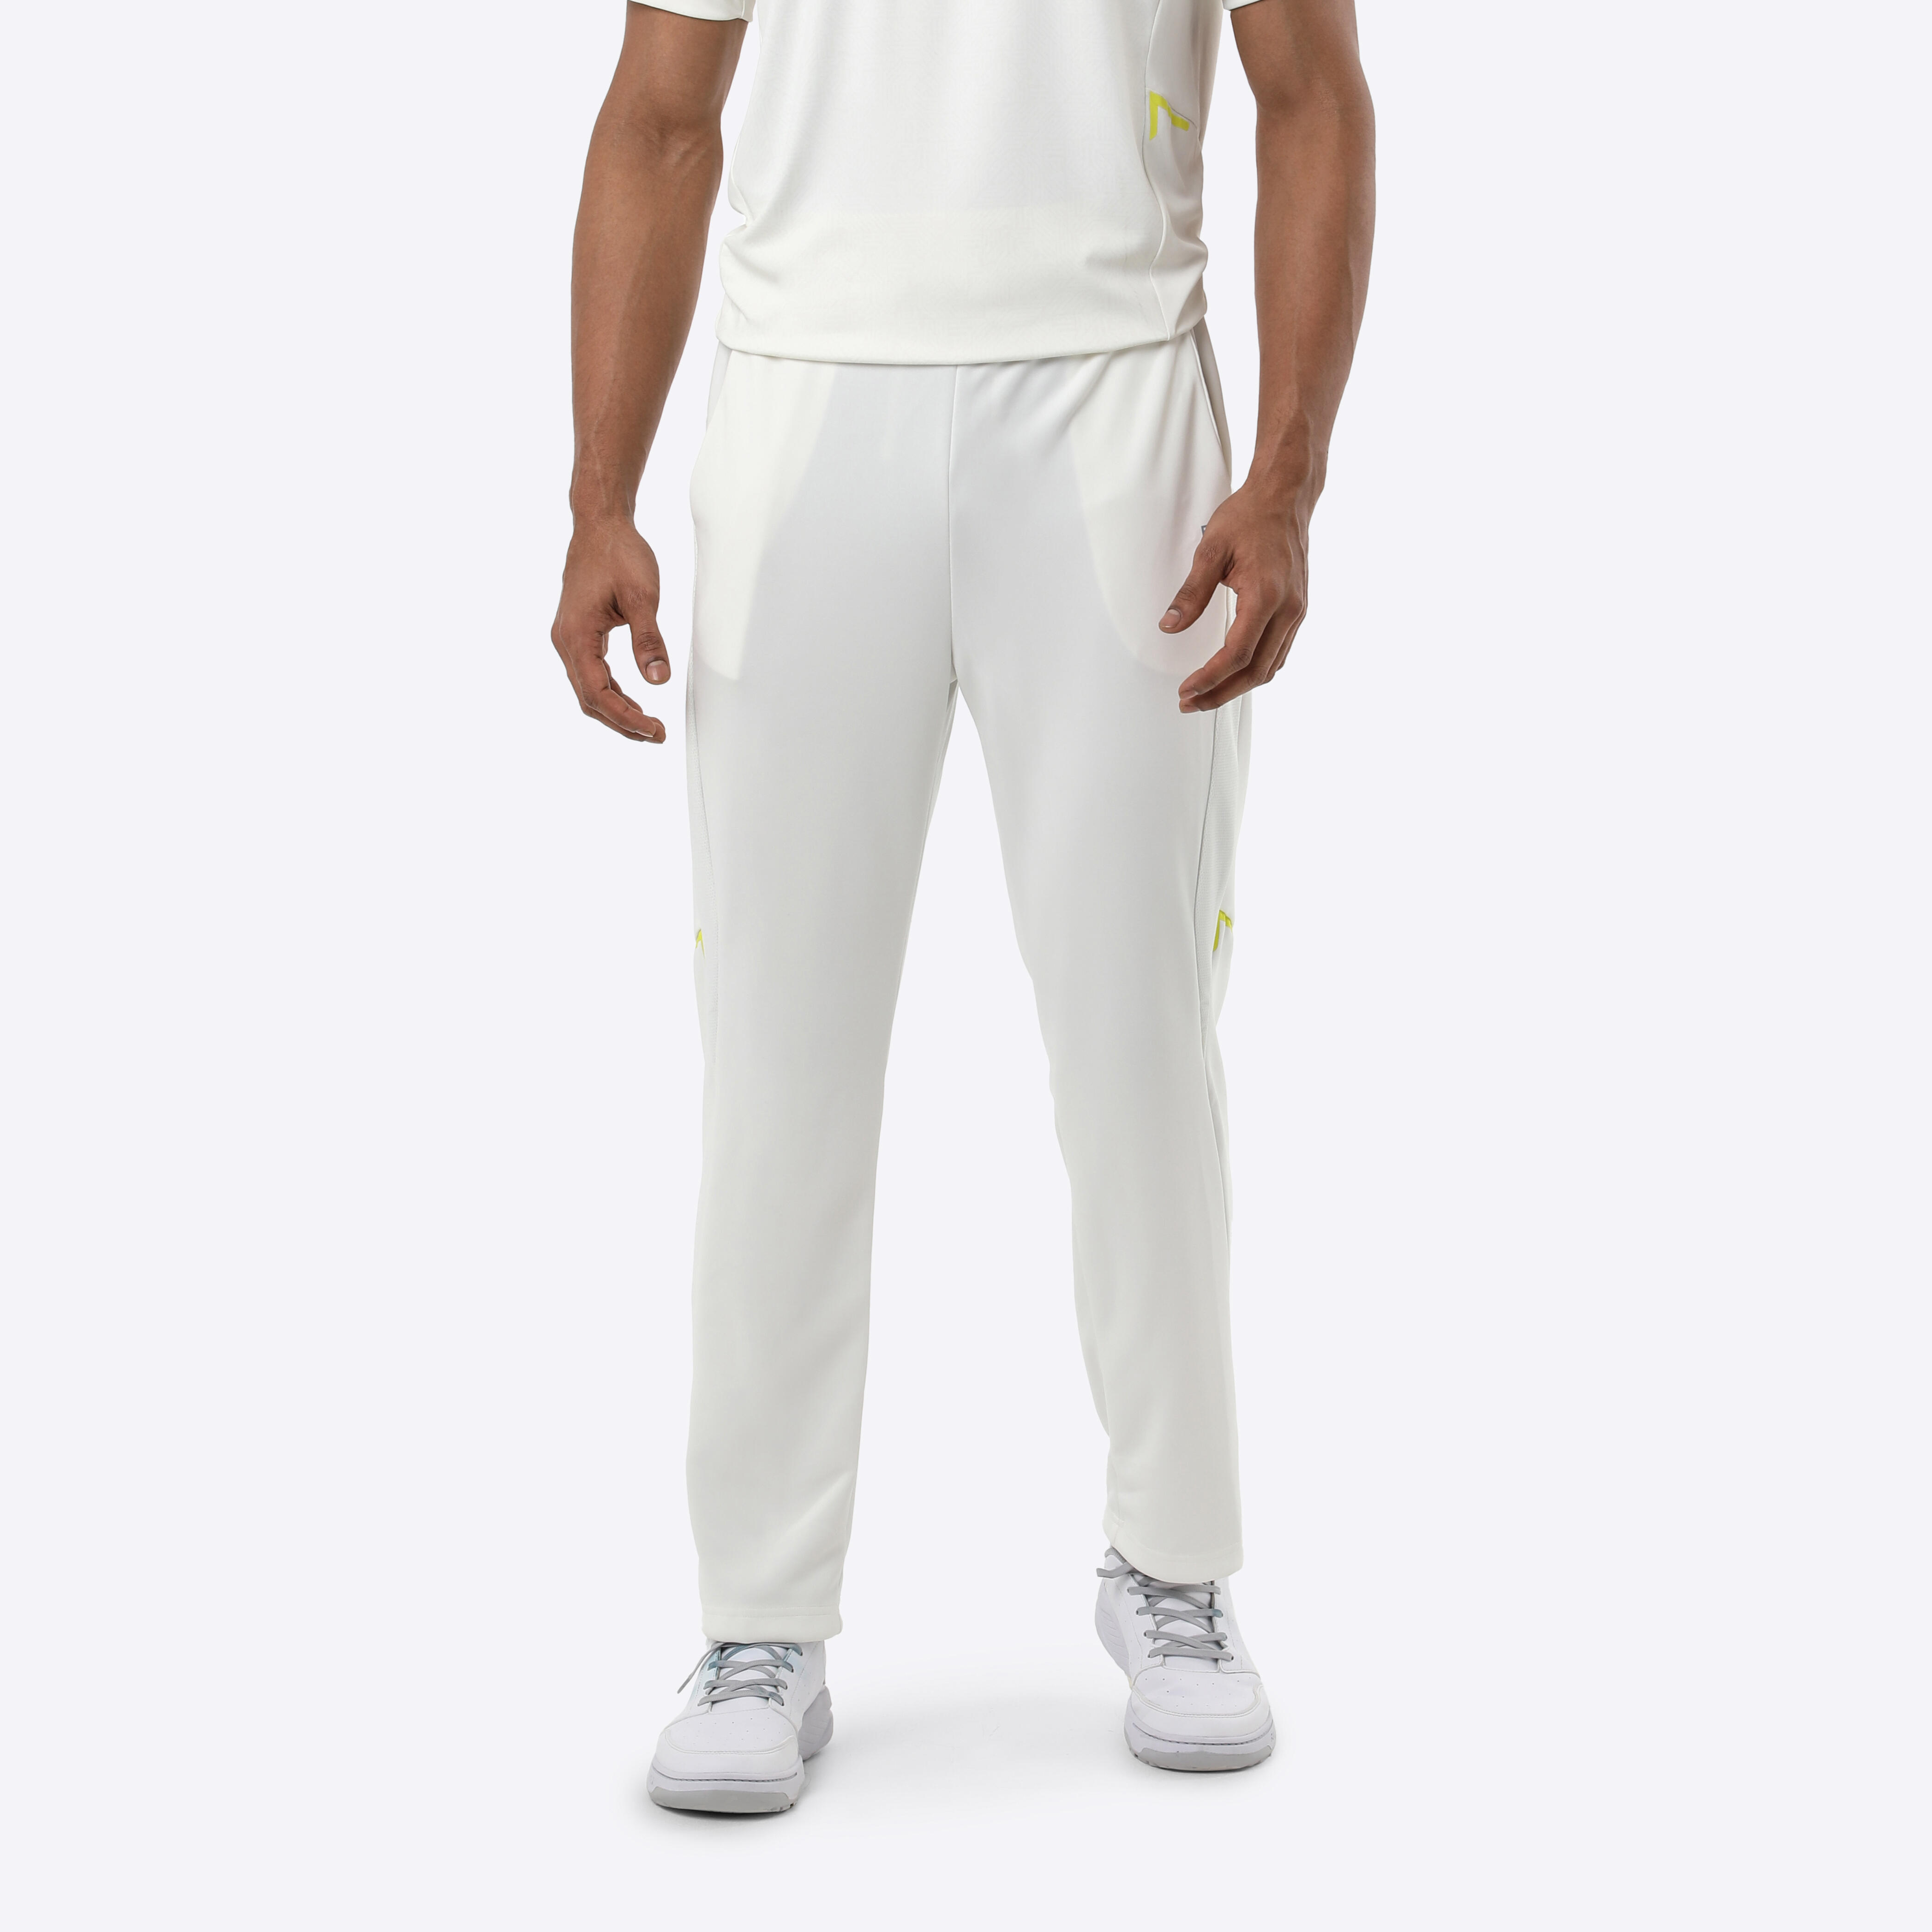 SweatControl Cricket TrouserPantLower White Track Pants